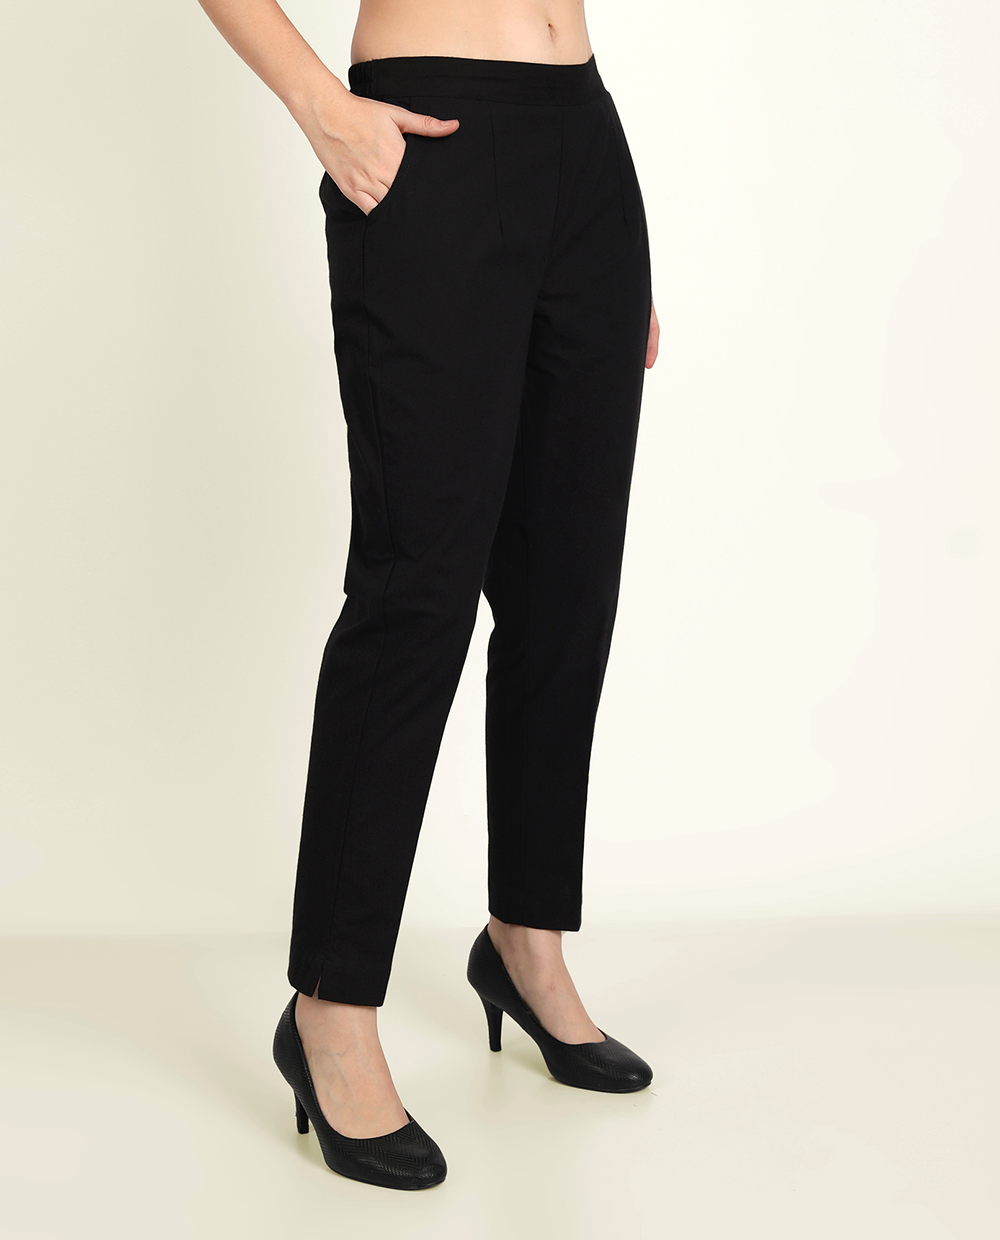 Comfort lady Hosiery Regular Fit Plain / Solid Regular Pants for